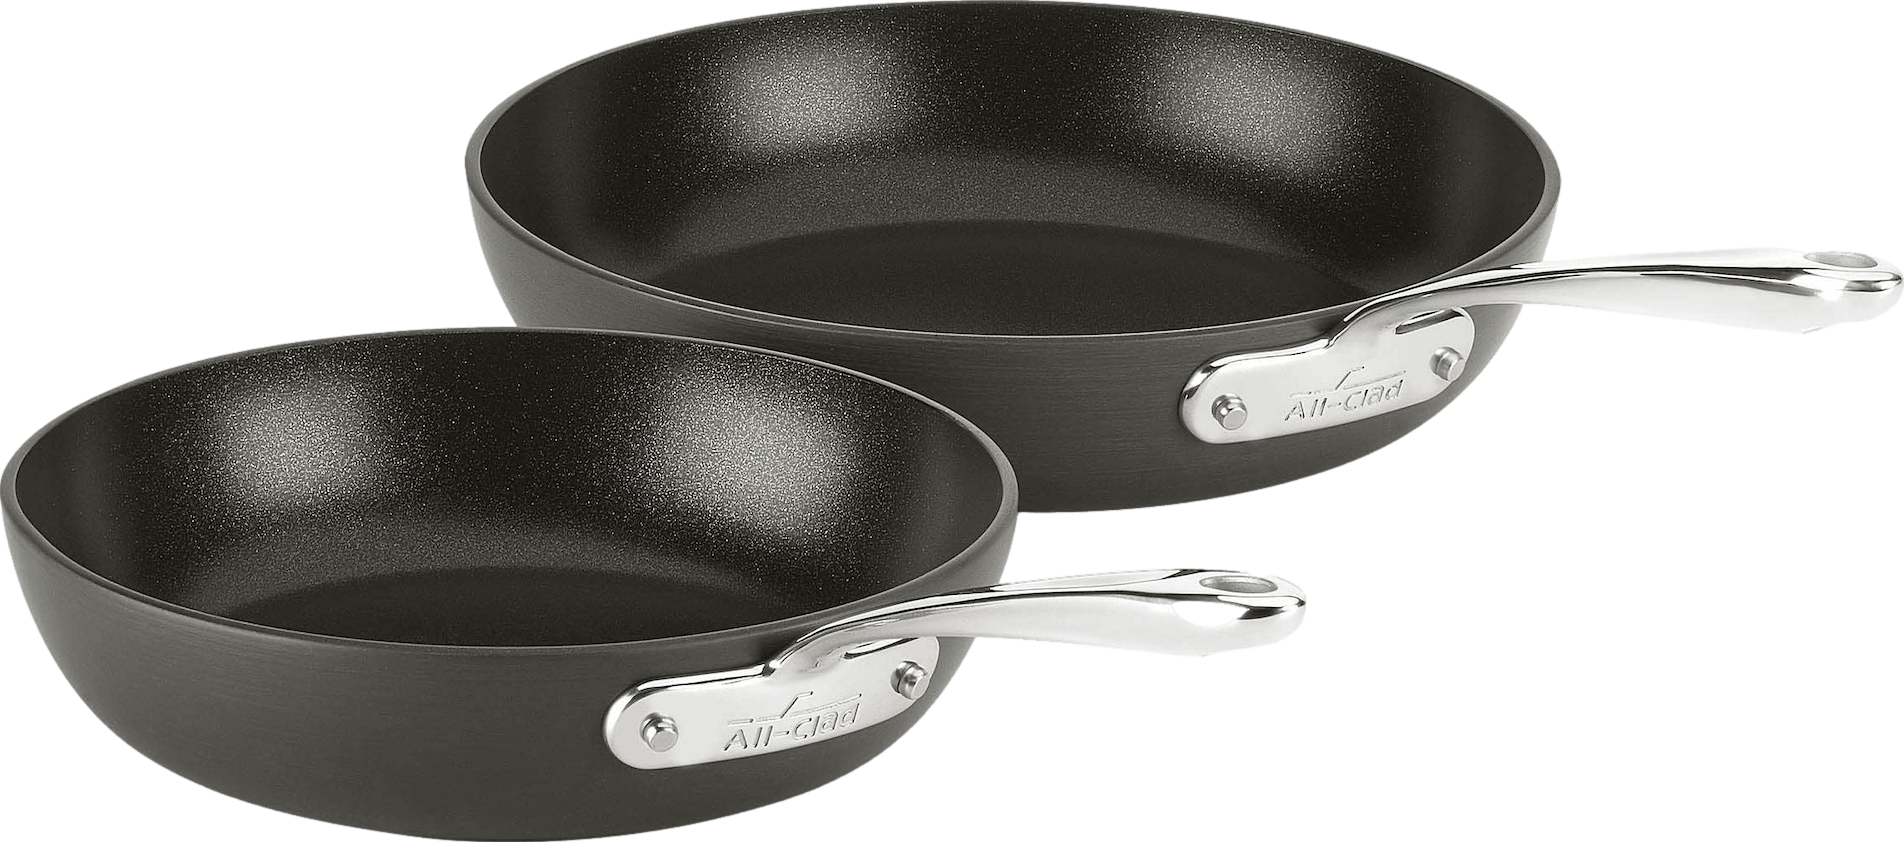 All-Clad Essentials Nonstick Cookware Set, 2 piece Fry Pan Set, 8.5 & 10.5 inch